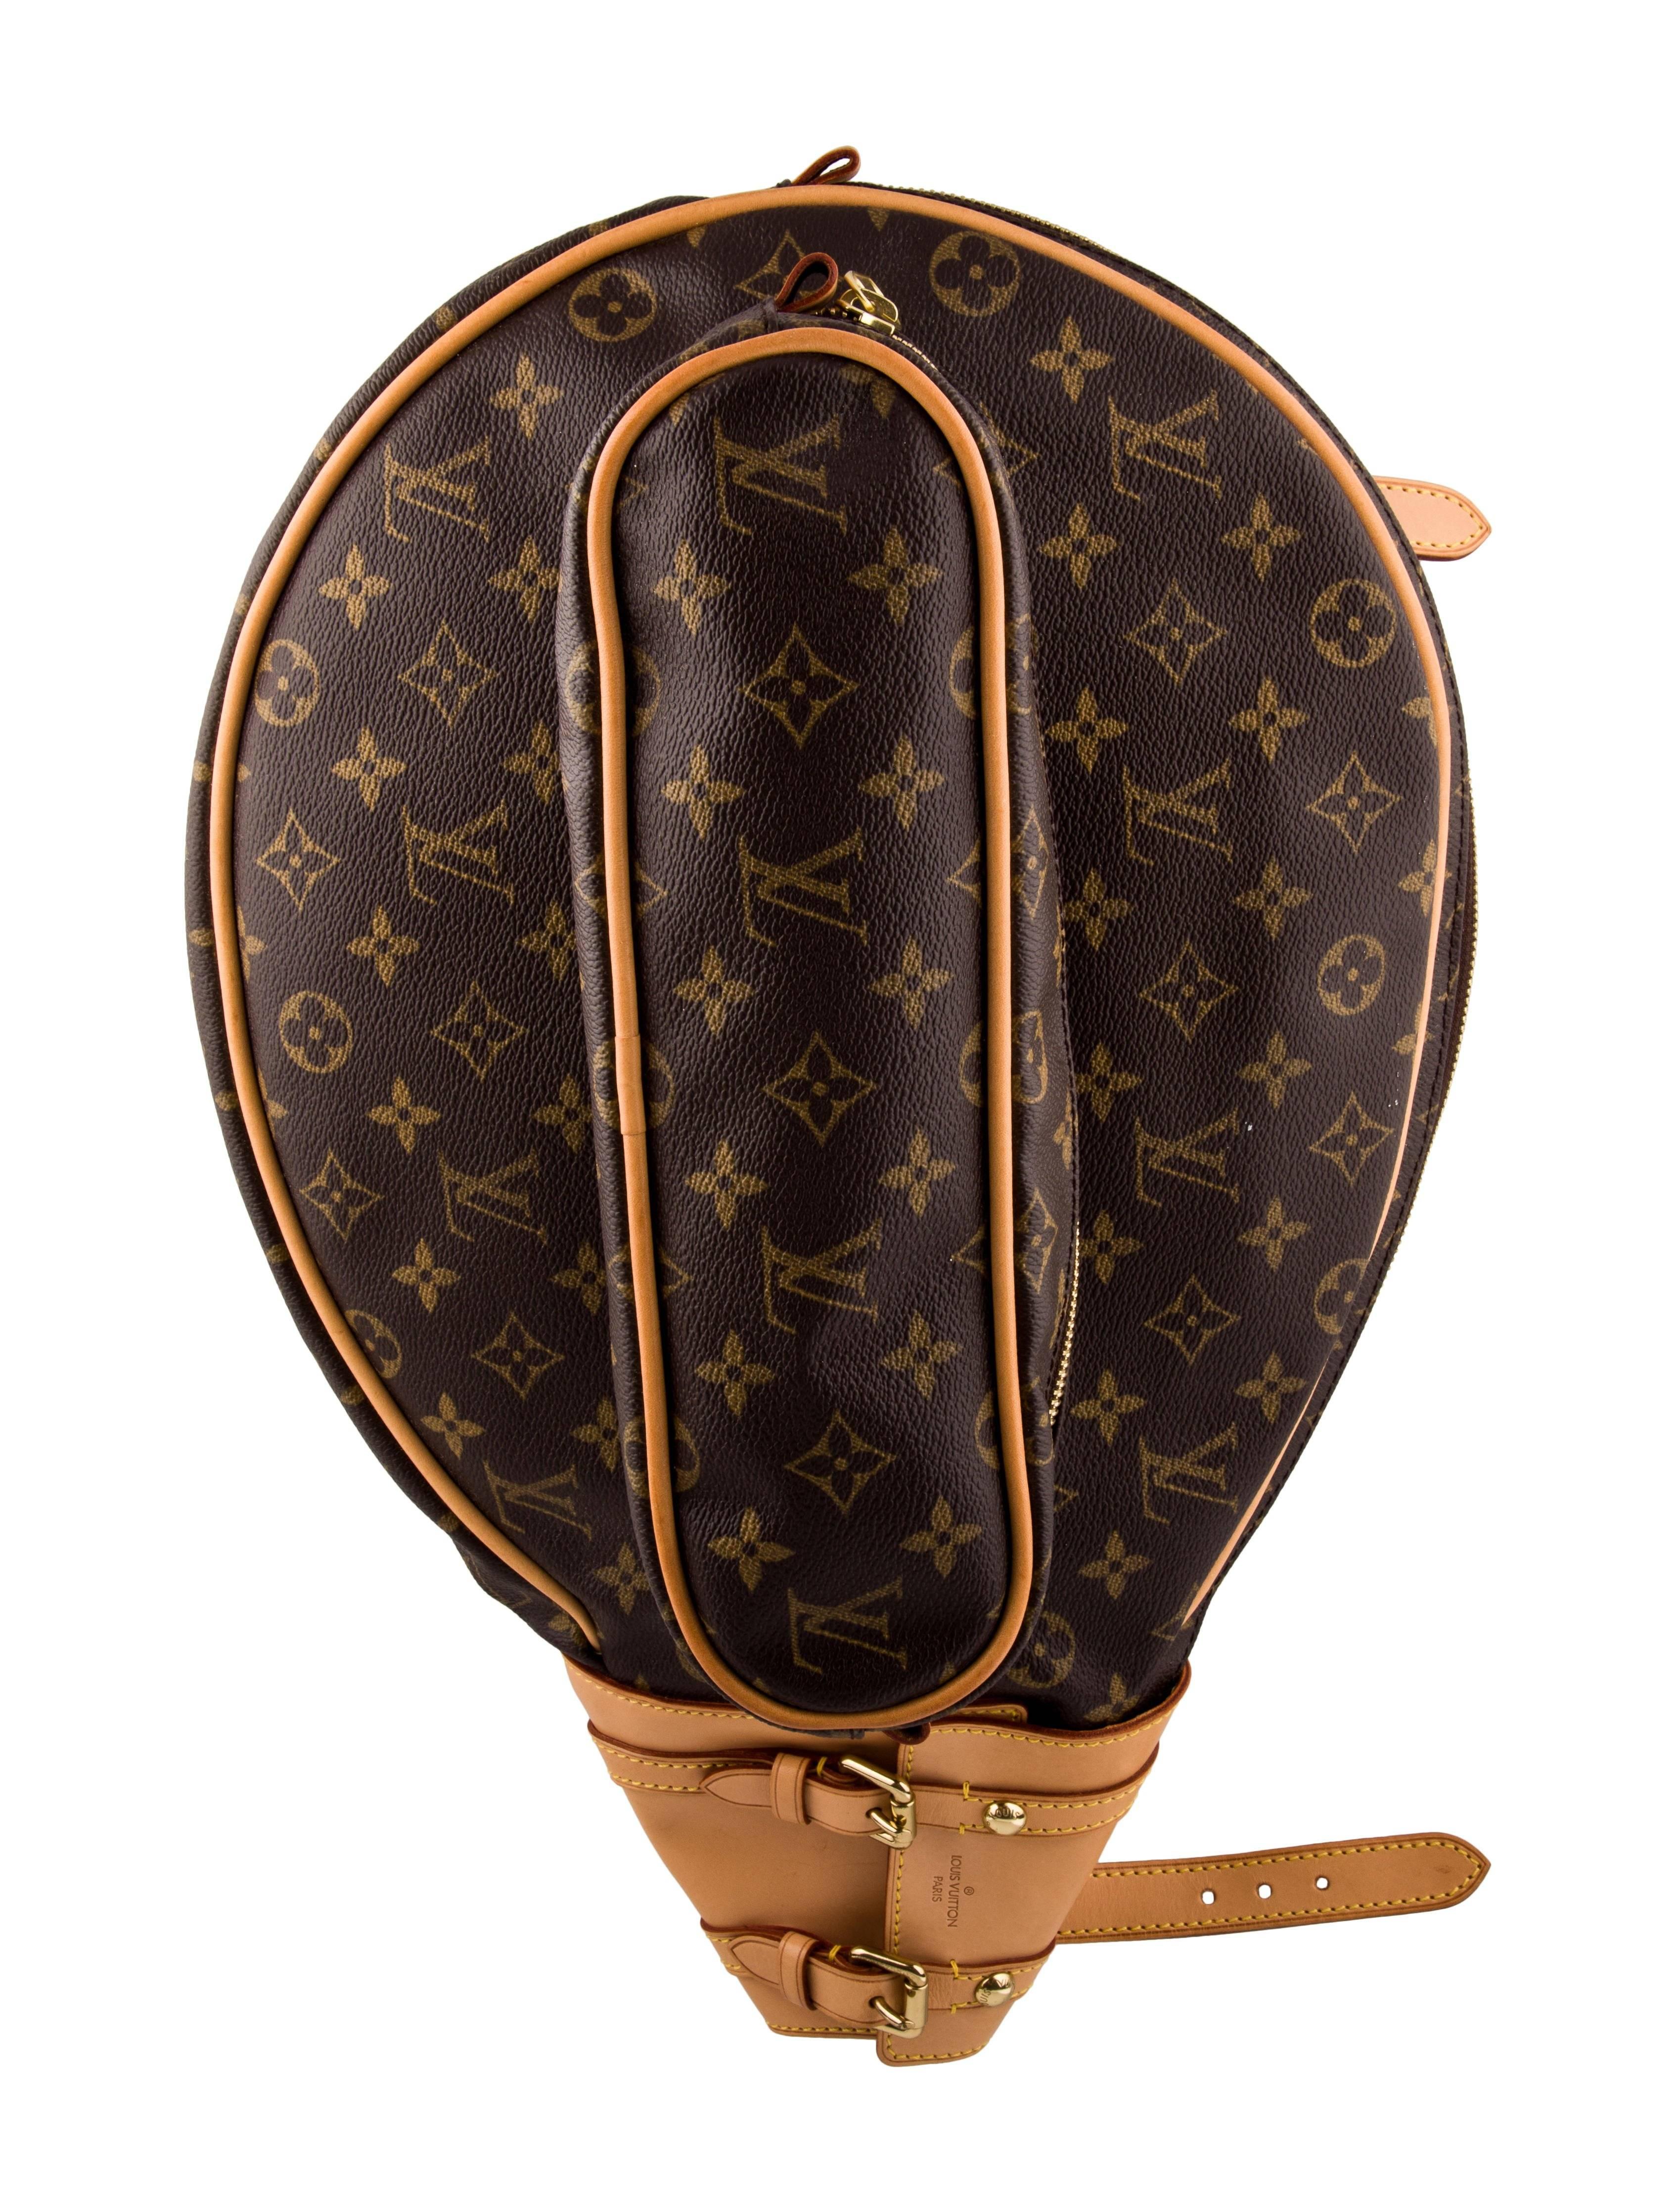 Louis Vuitton Monogram Men's Women's Tennis Racquet and Ball Storage Travel Case Bag

Monogram canvas
Leather
Gold tone hardware
Twill lining
Measures 12.5" W x 19" L x 2.25" D 